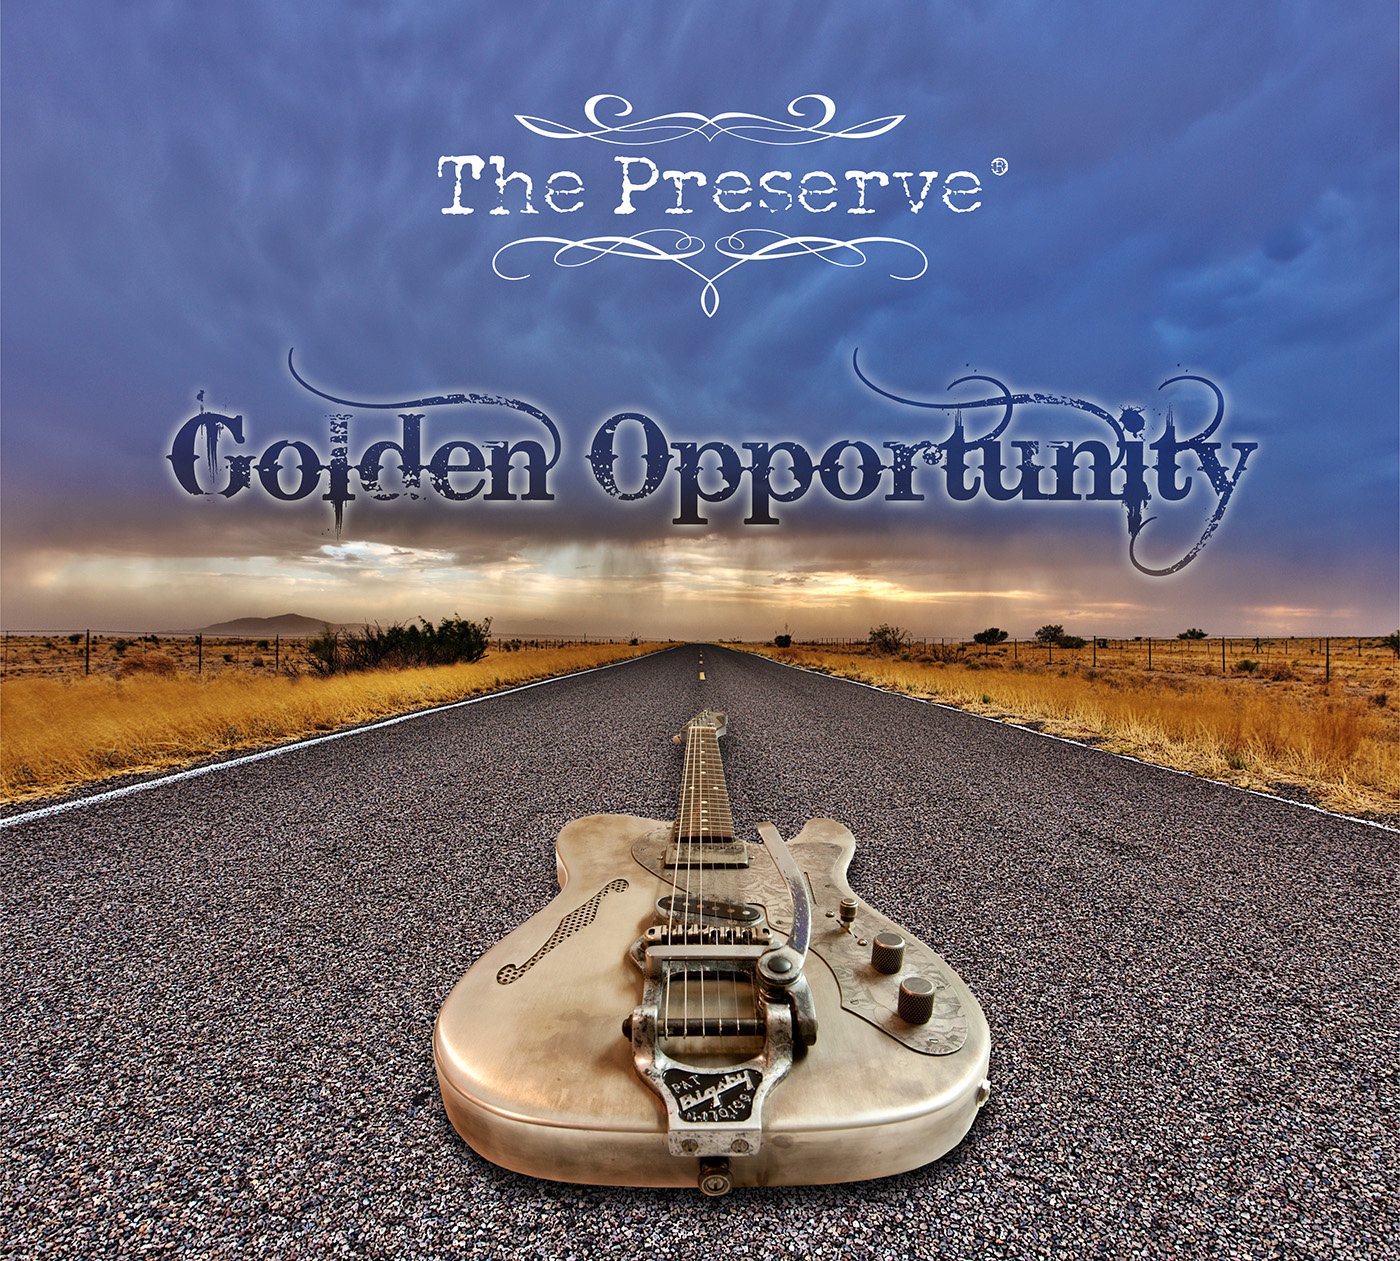 The Preserve "Golden Opportunity"